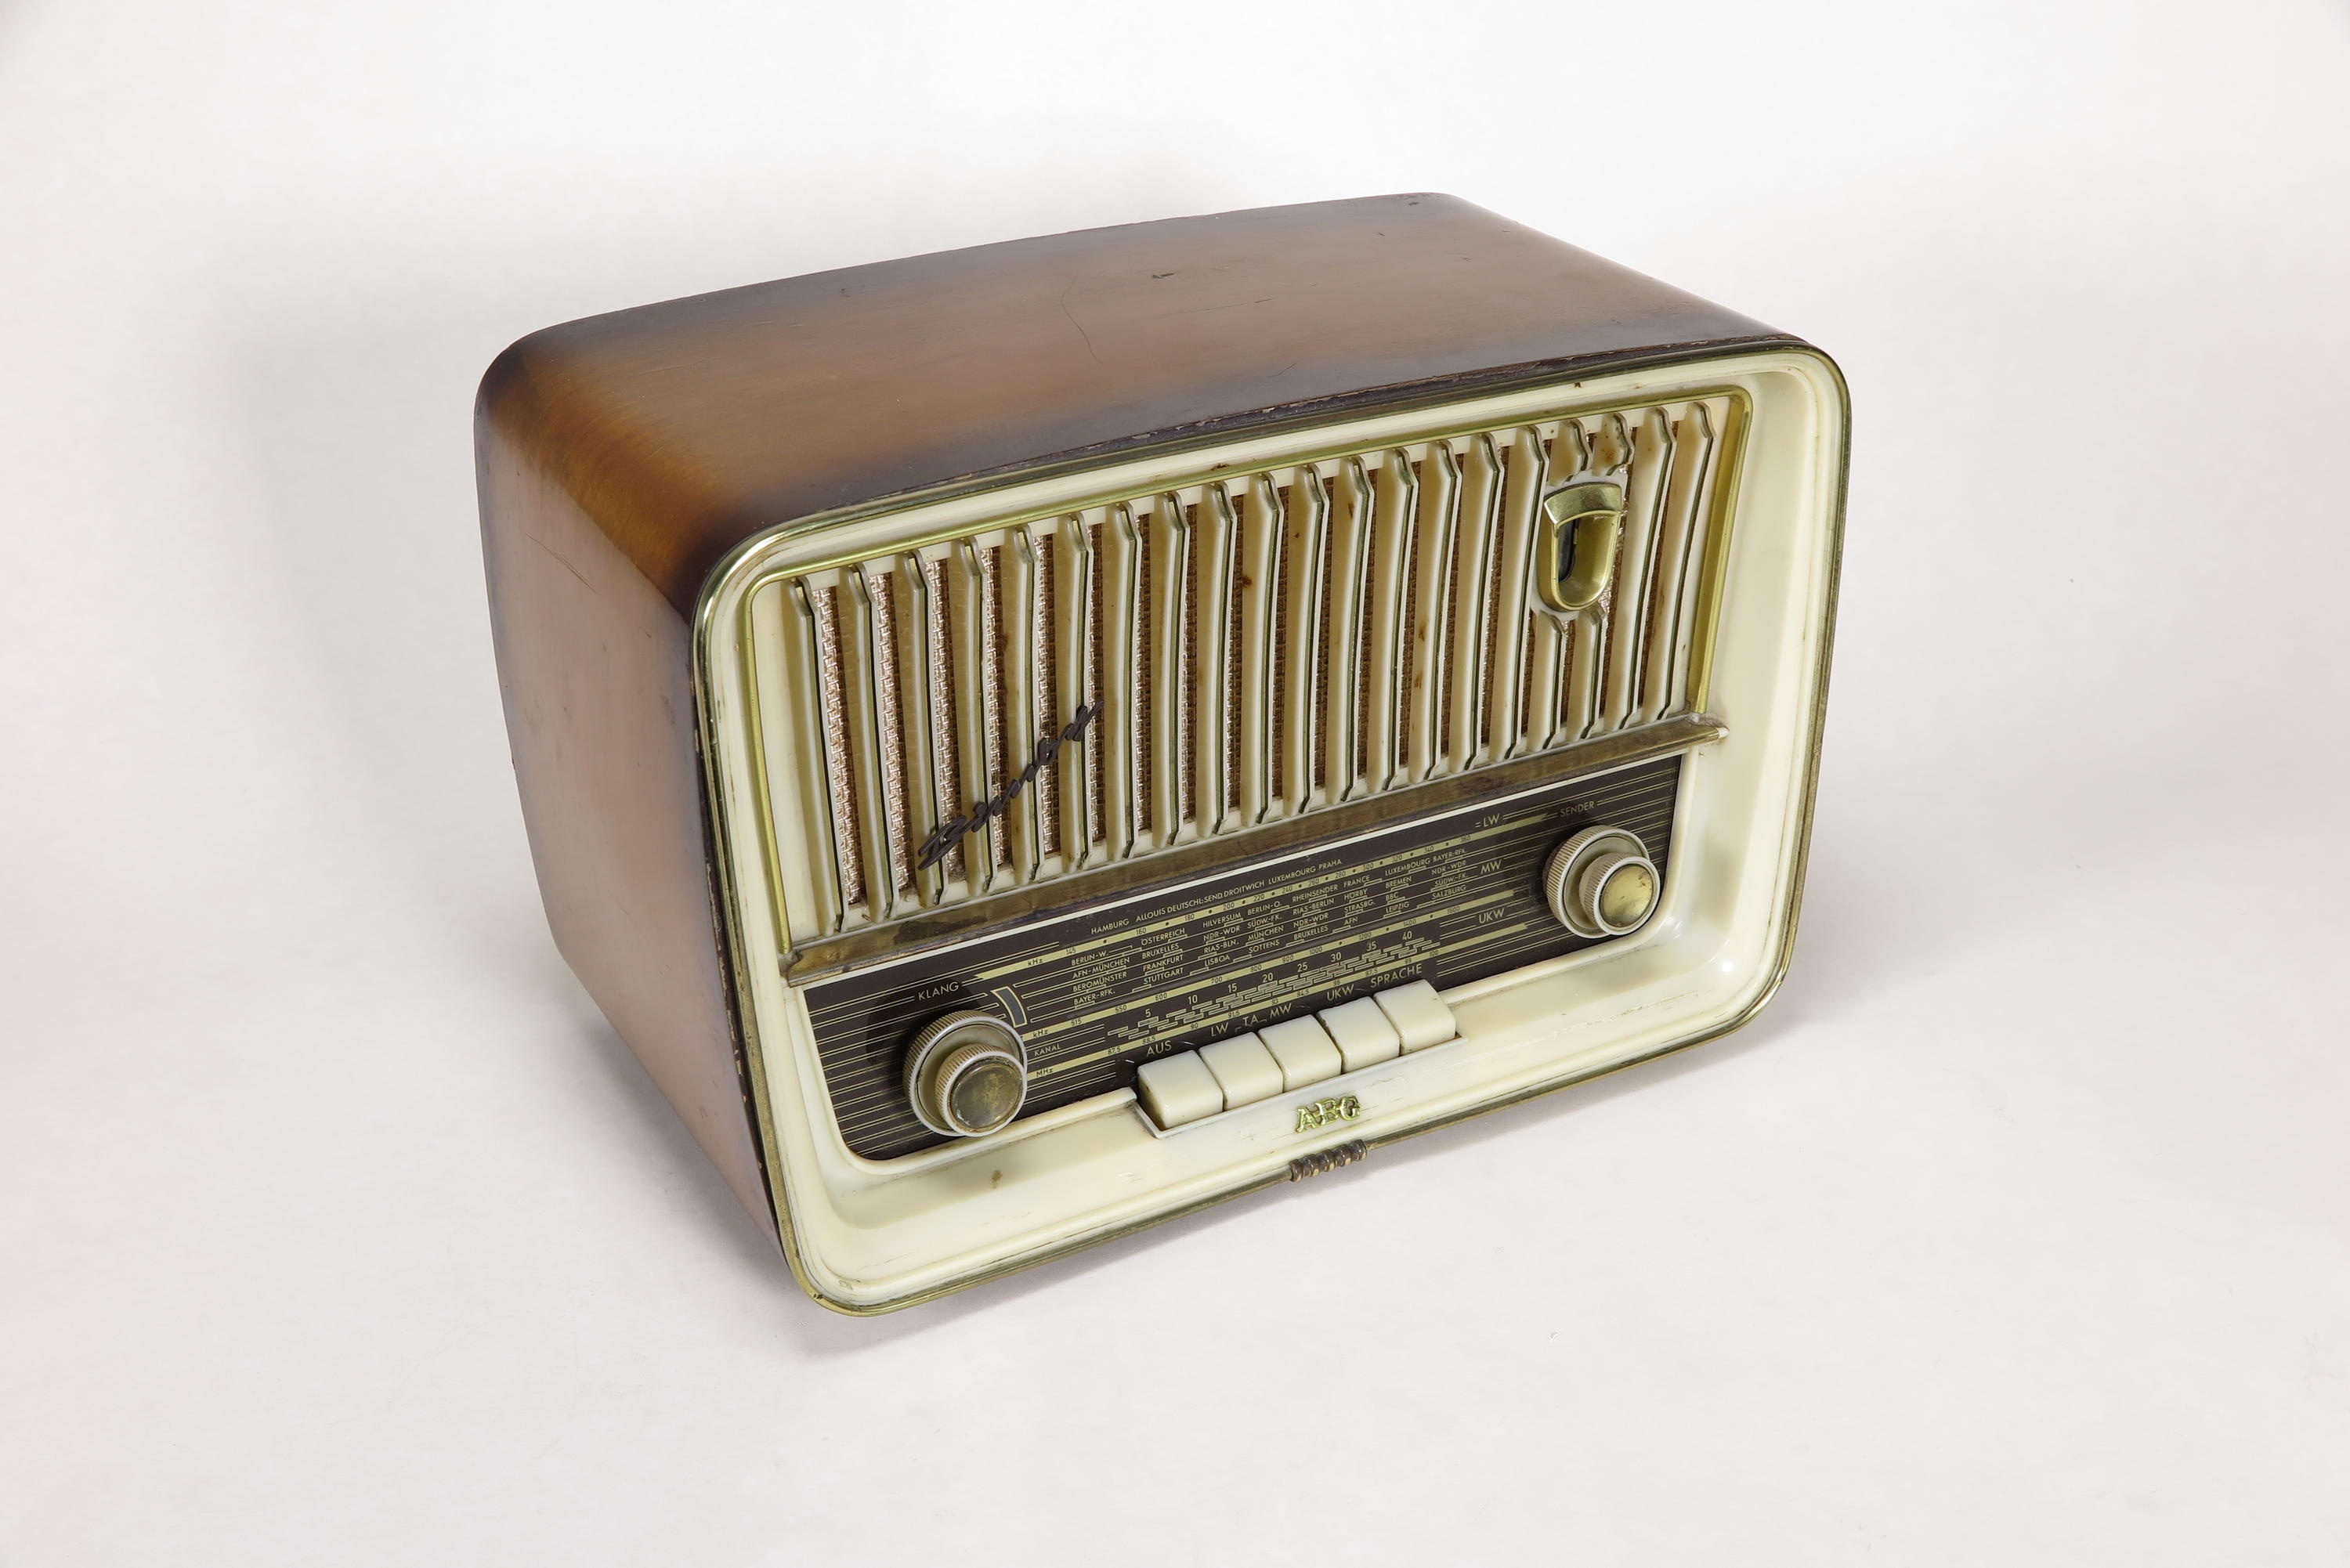 Radio AEG Bimby 58 (Deutsches Technikmuseum CC BY)